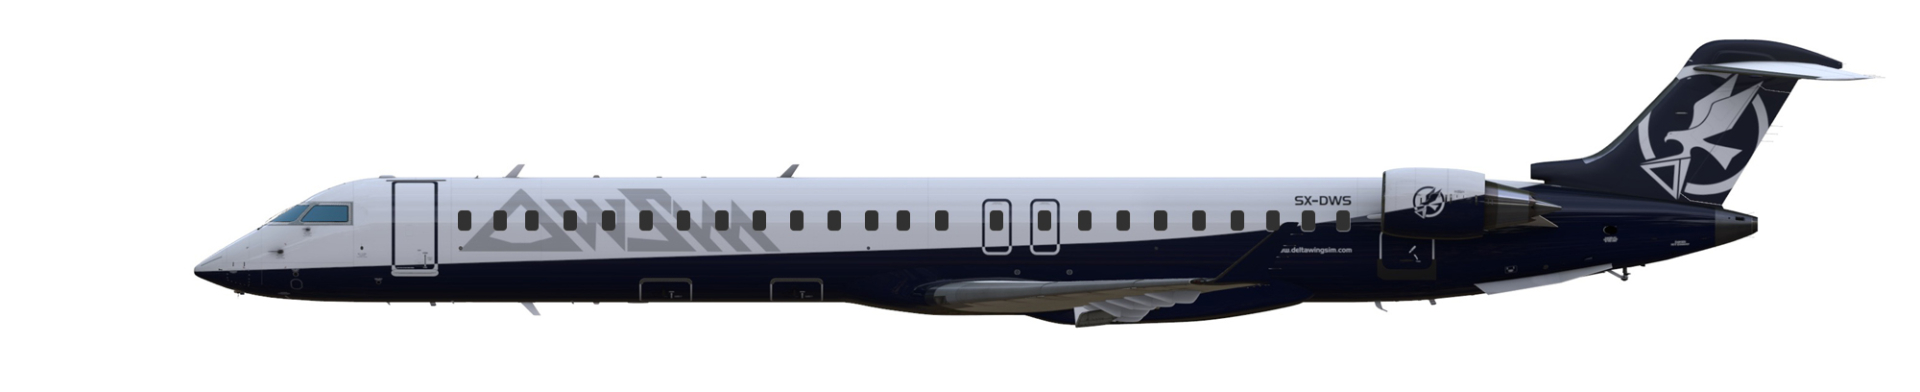 DeltaWing Simulations CRJ-900